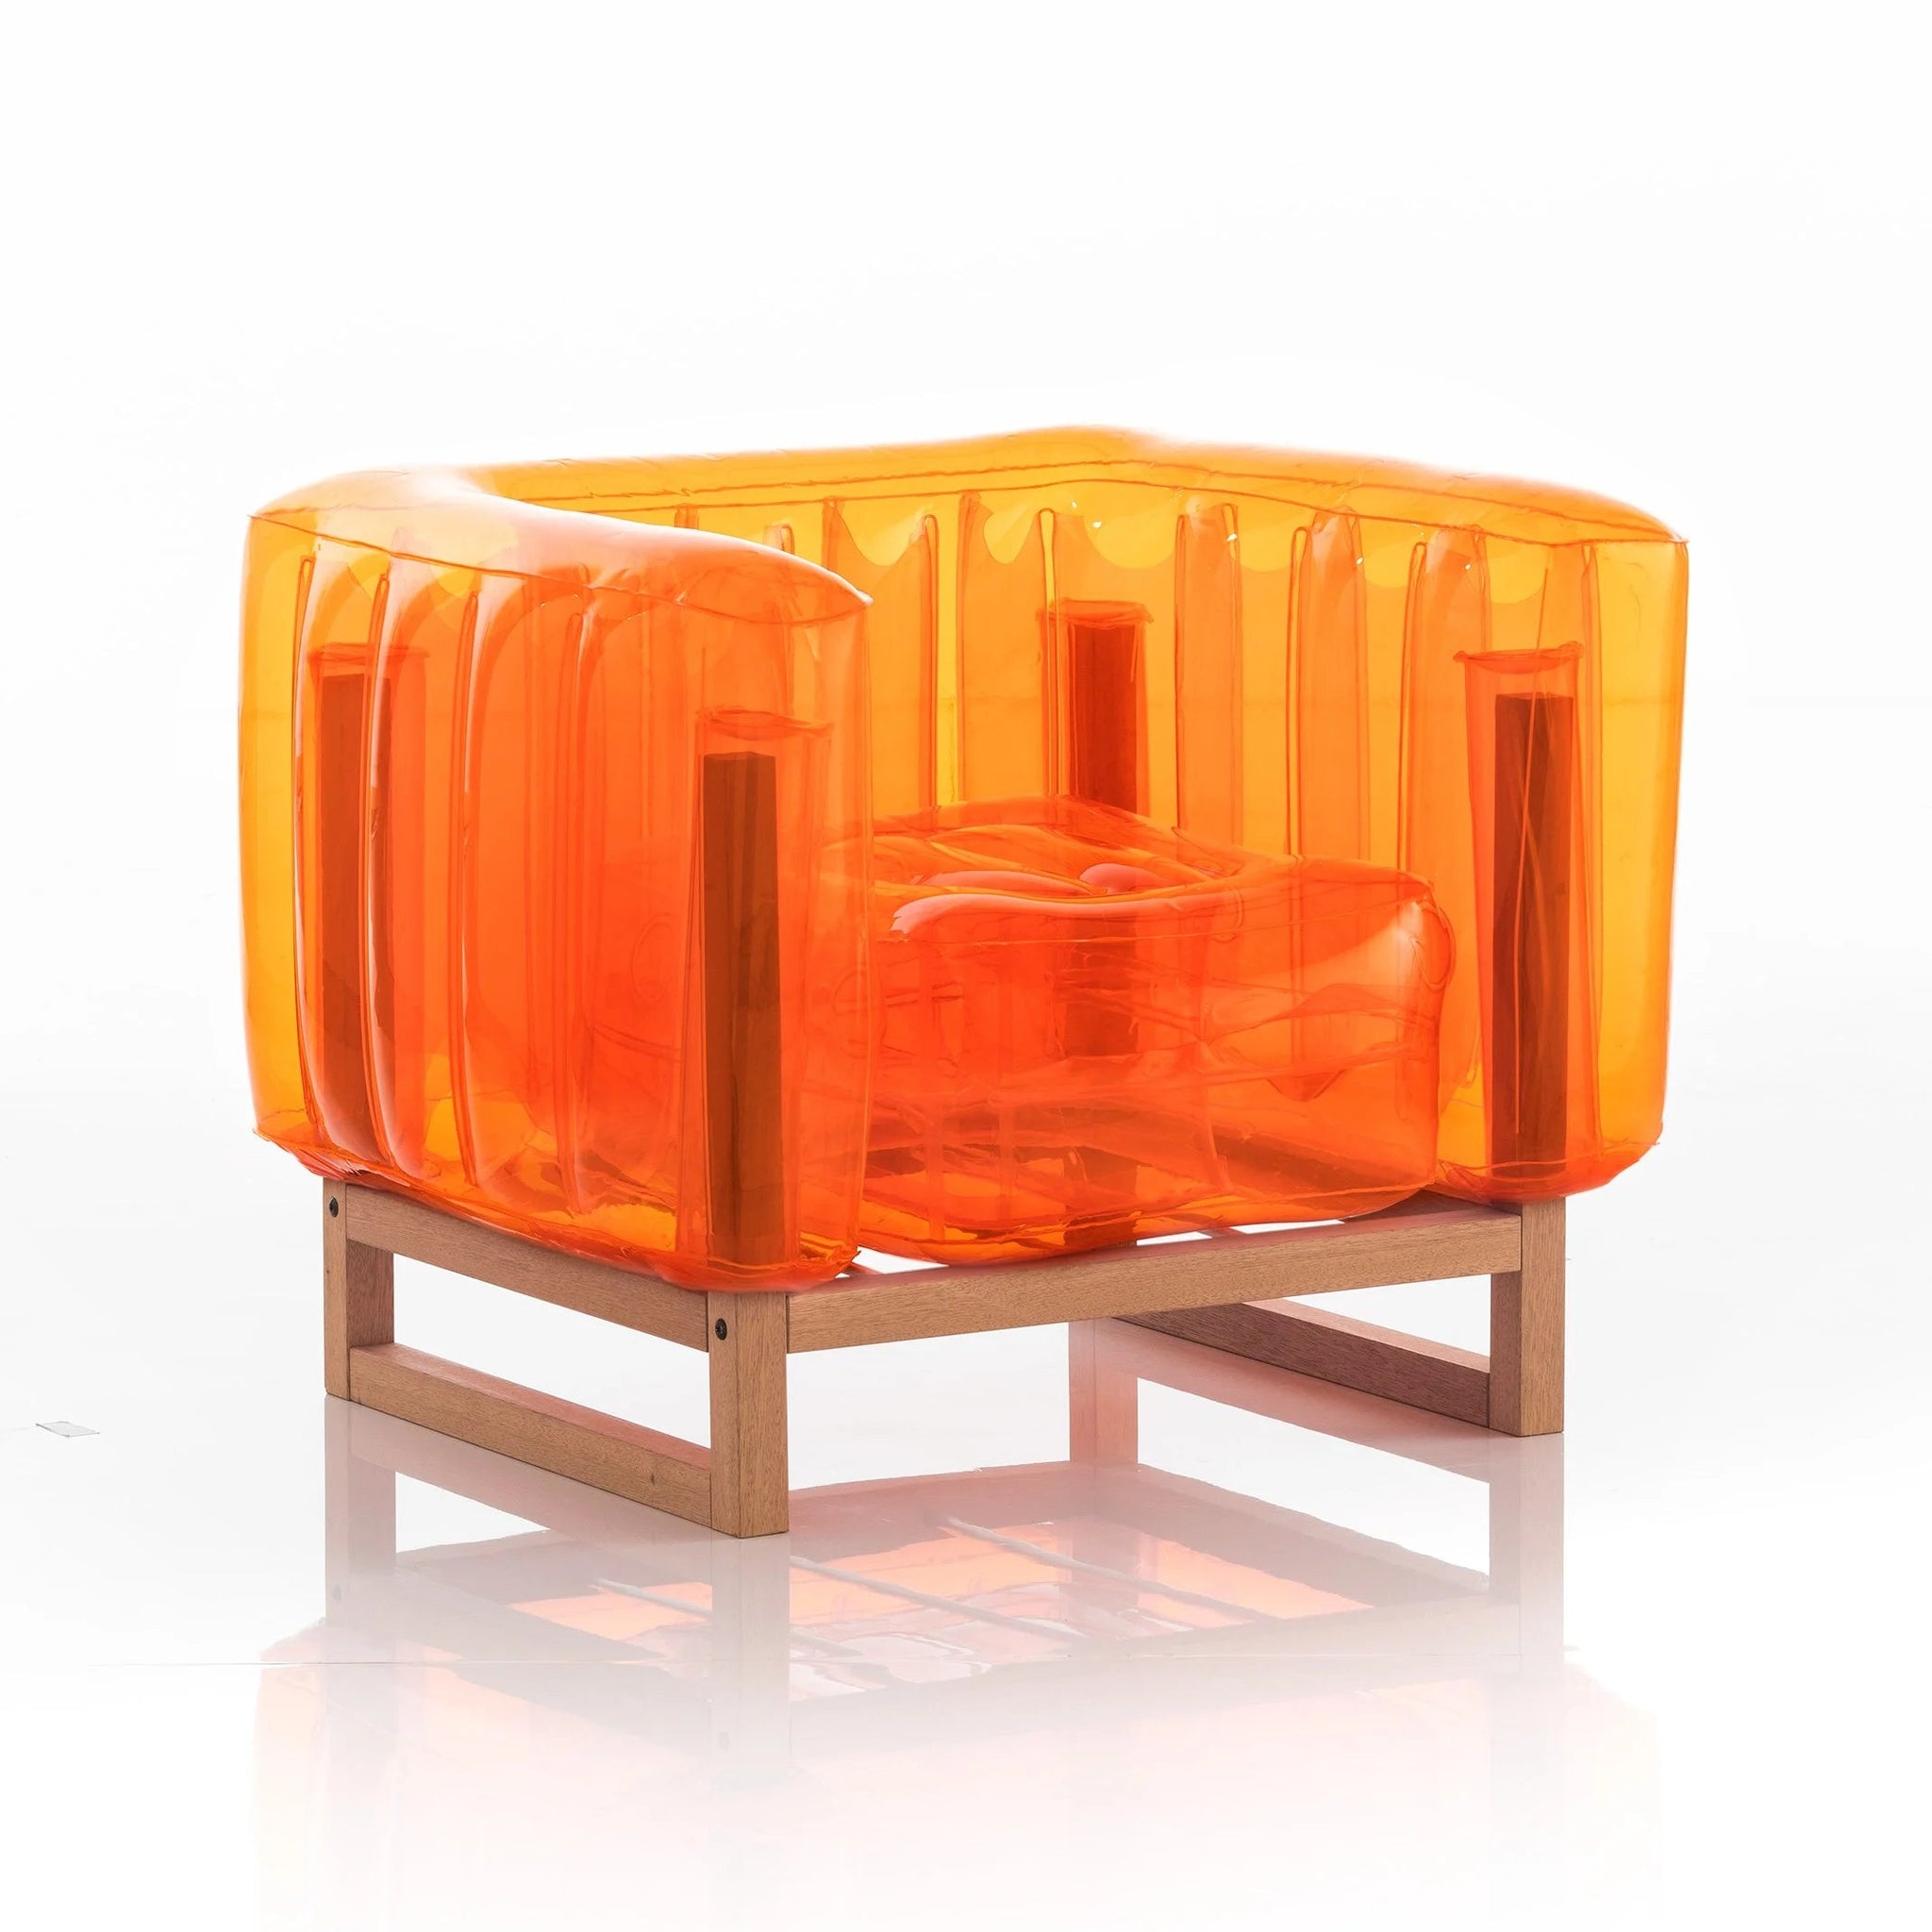 Yomi Eko - Aufblasbarer Sessel Chairs von Mojow